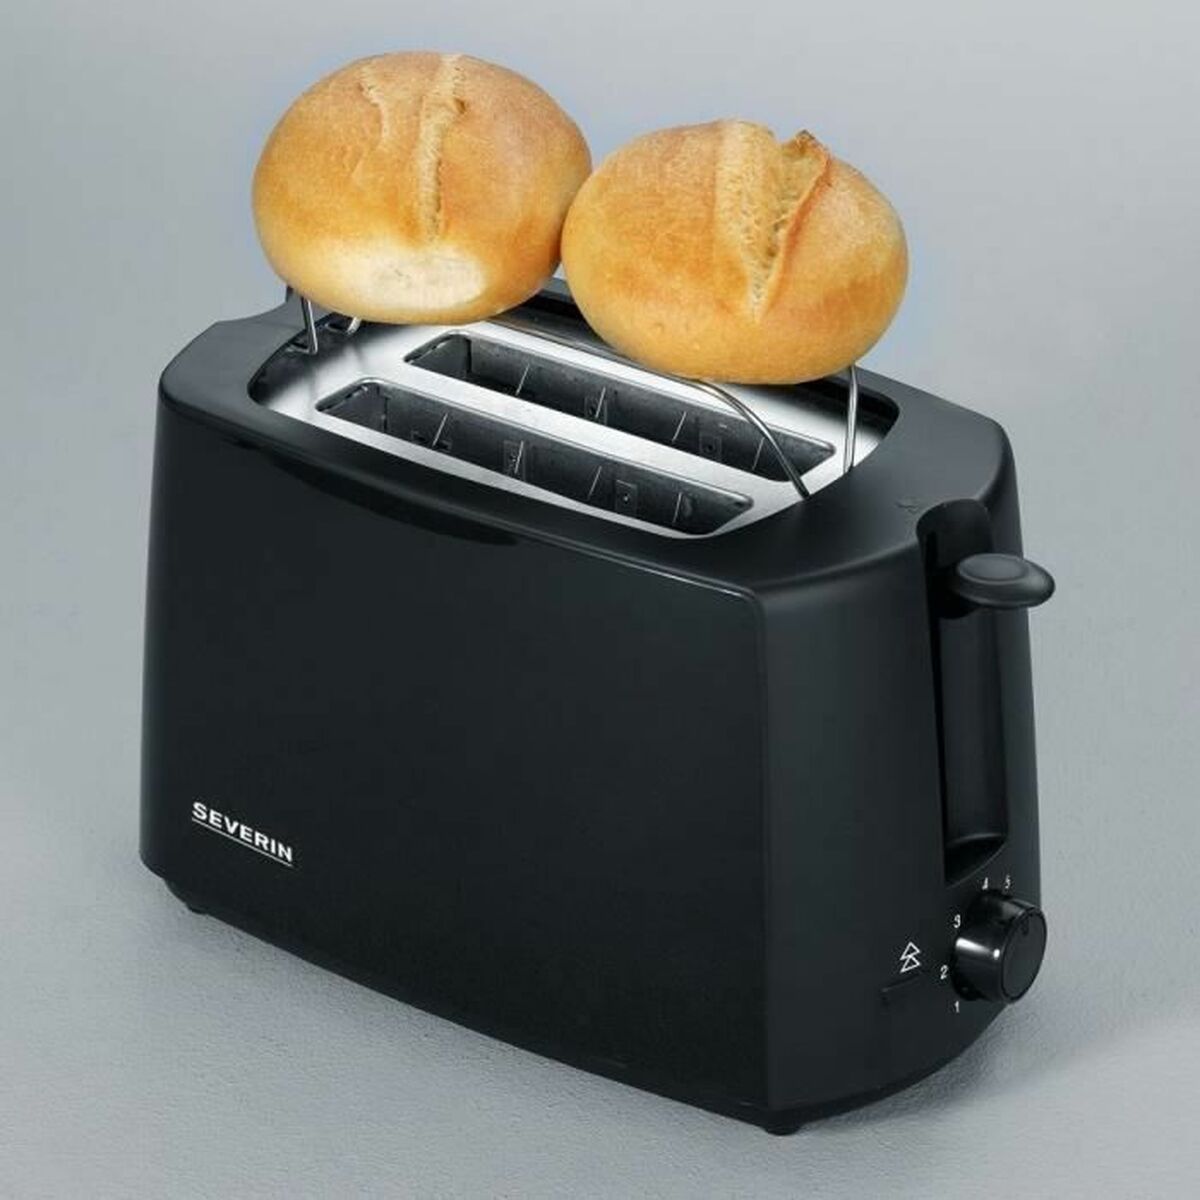 Kaufe Toaster Severin AT 2287 bei AWK Flagship um € 50.00